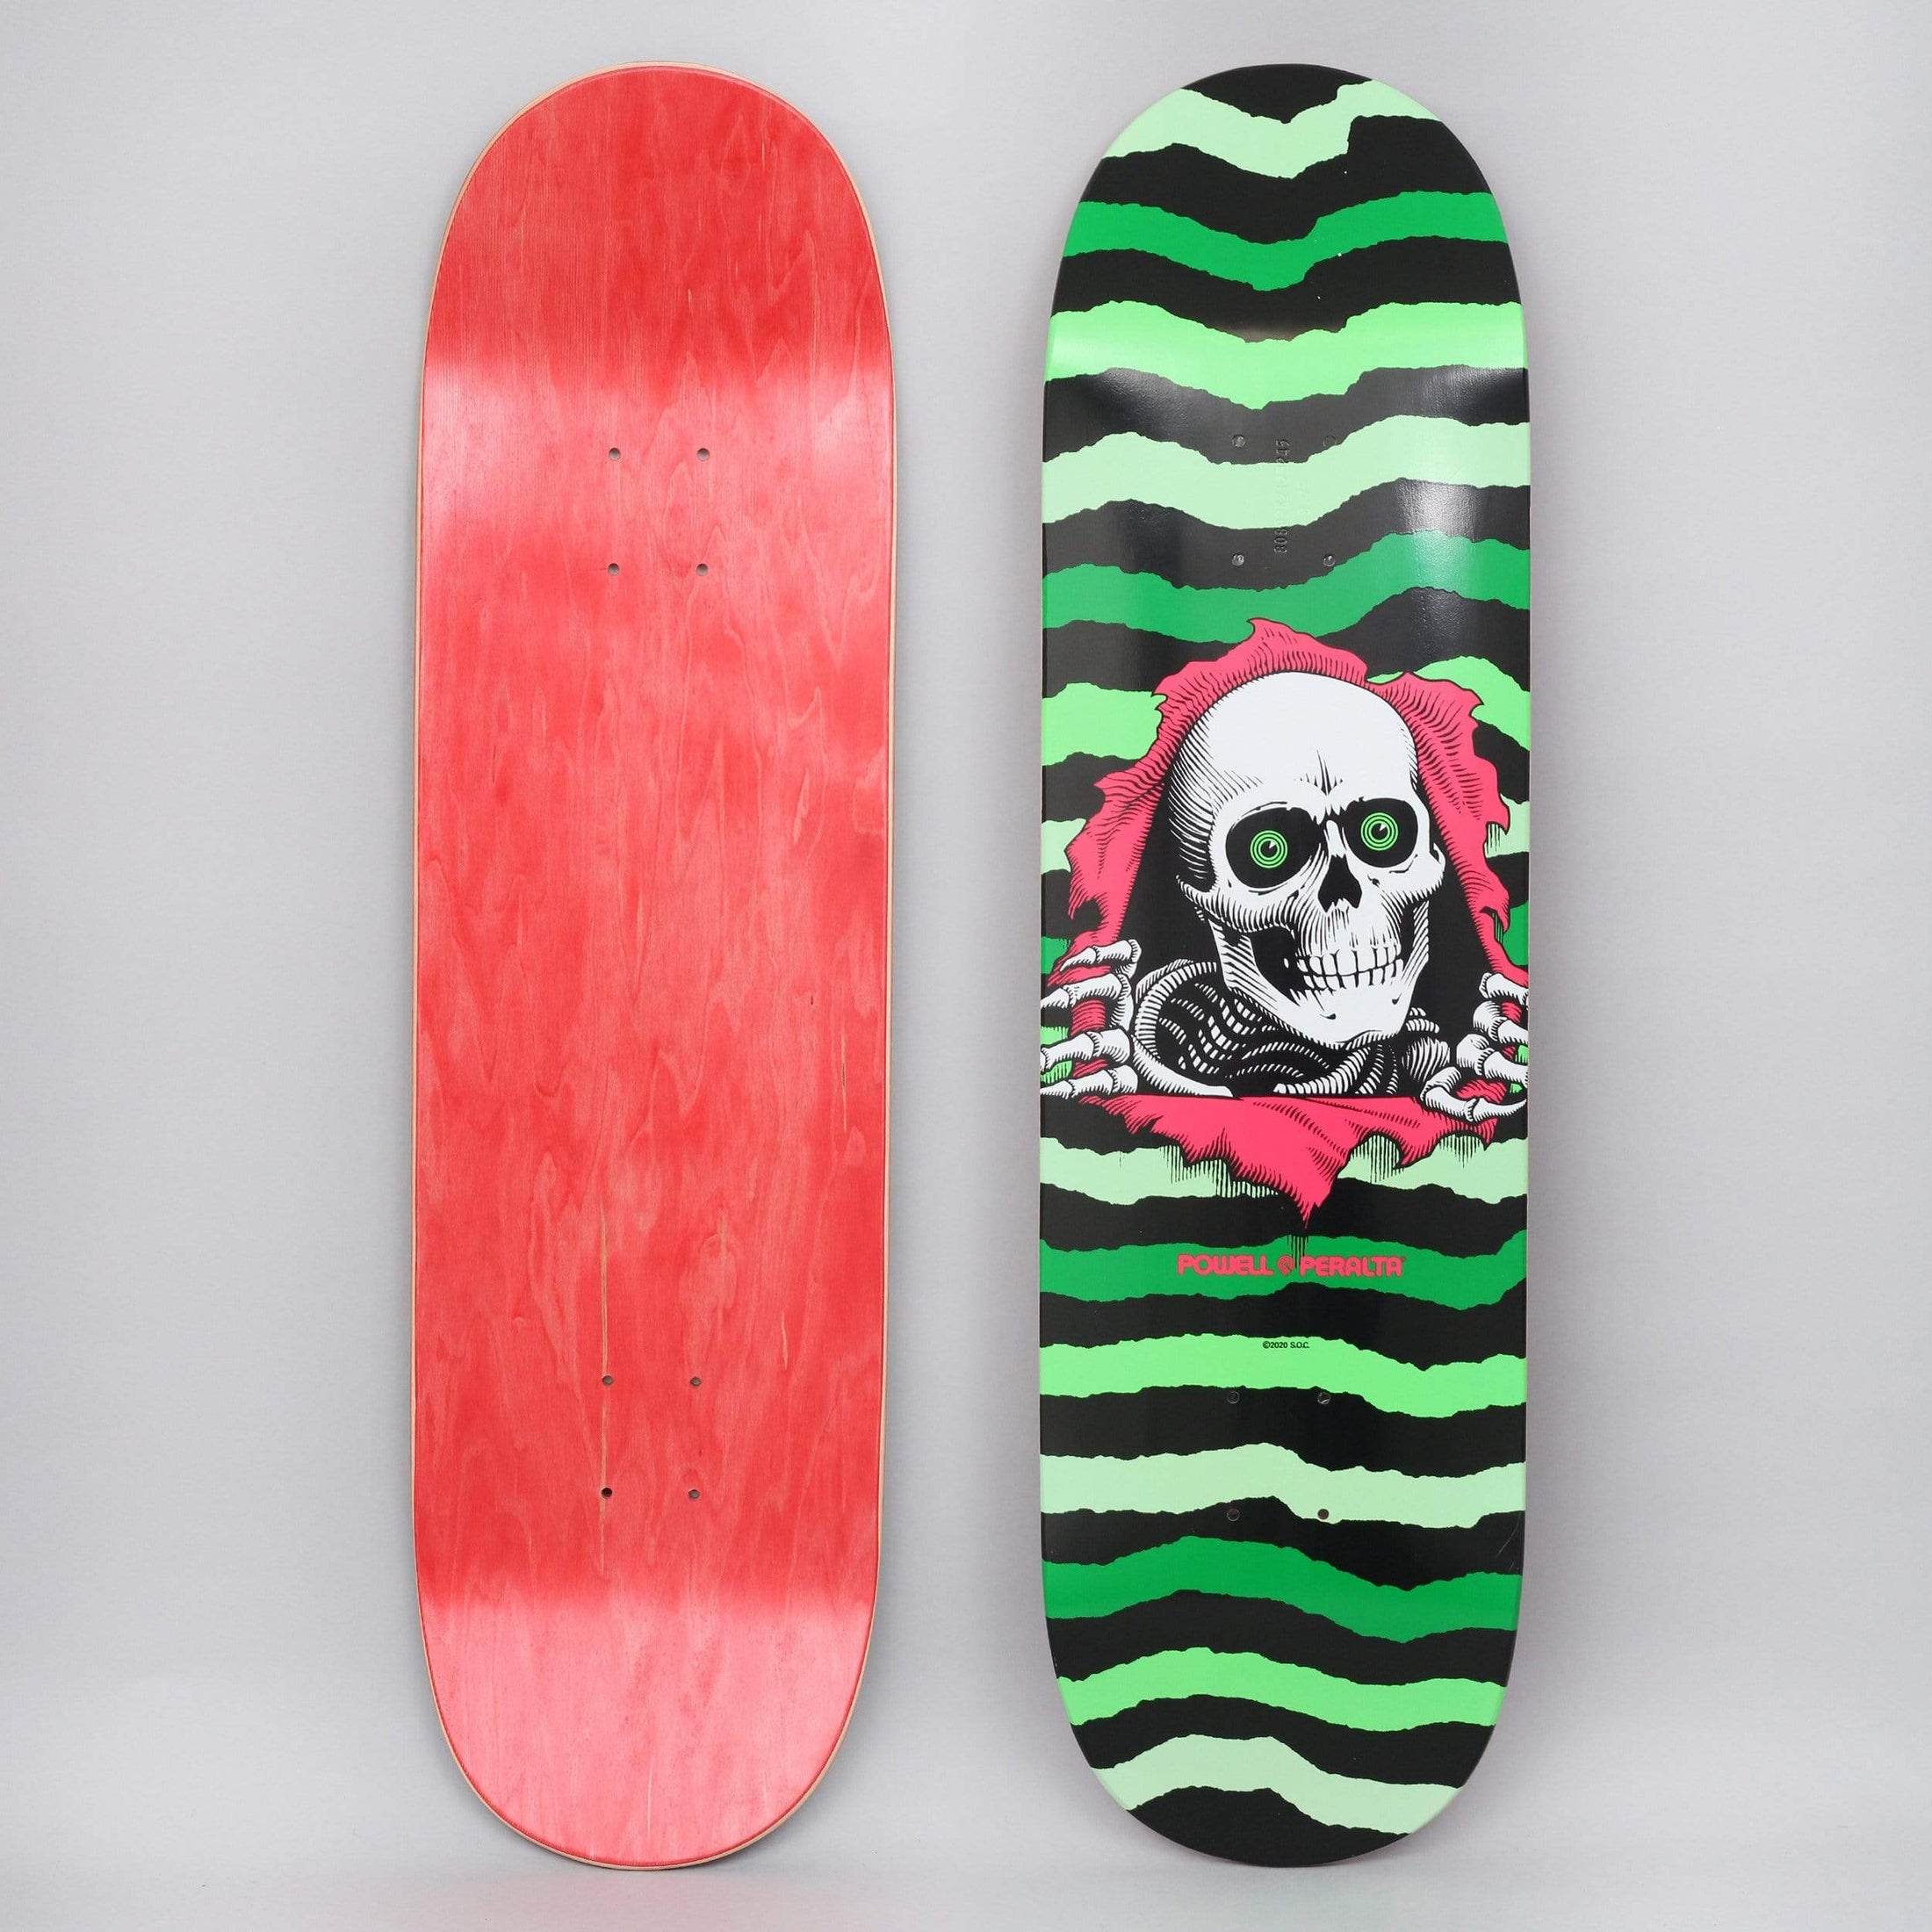 Powell Peralta 8.75 Ripper Shape 245 Skateboard Deck Green